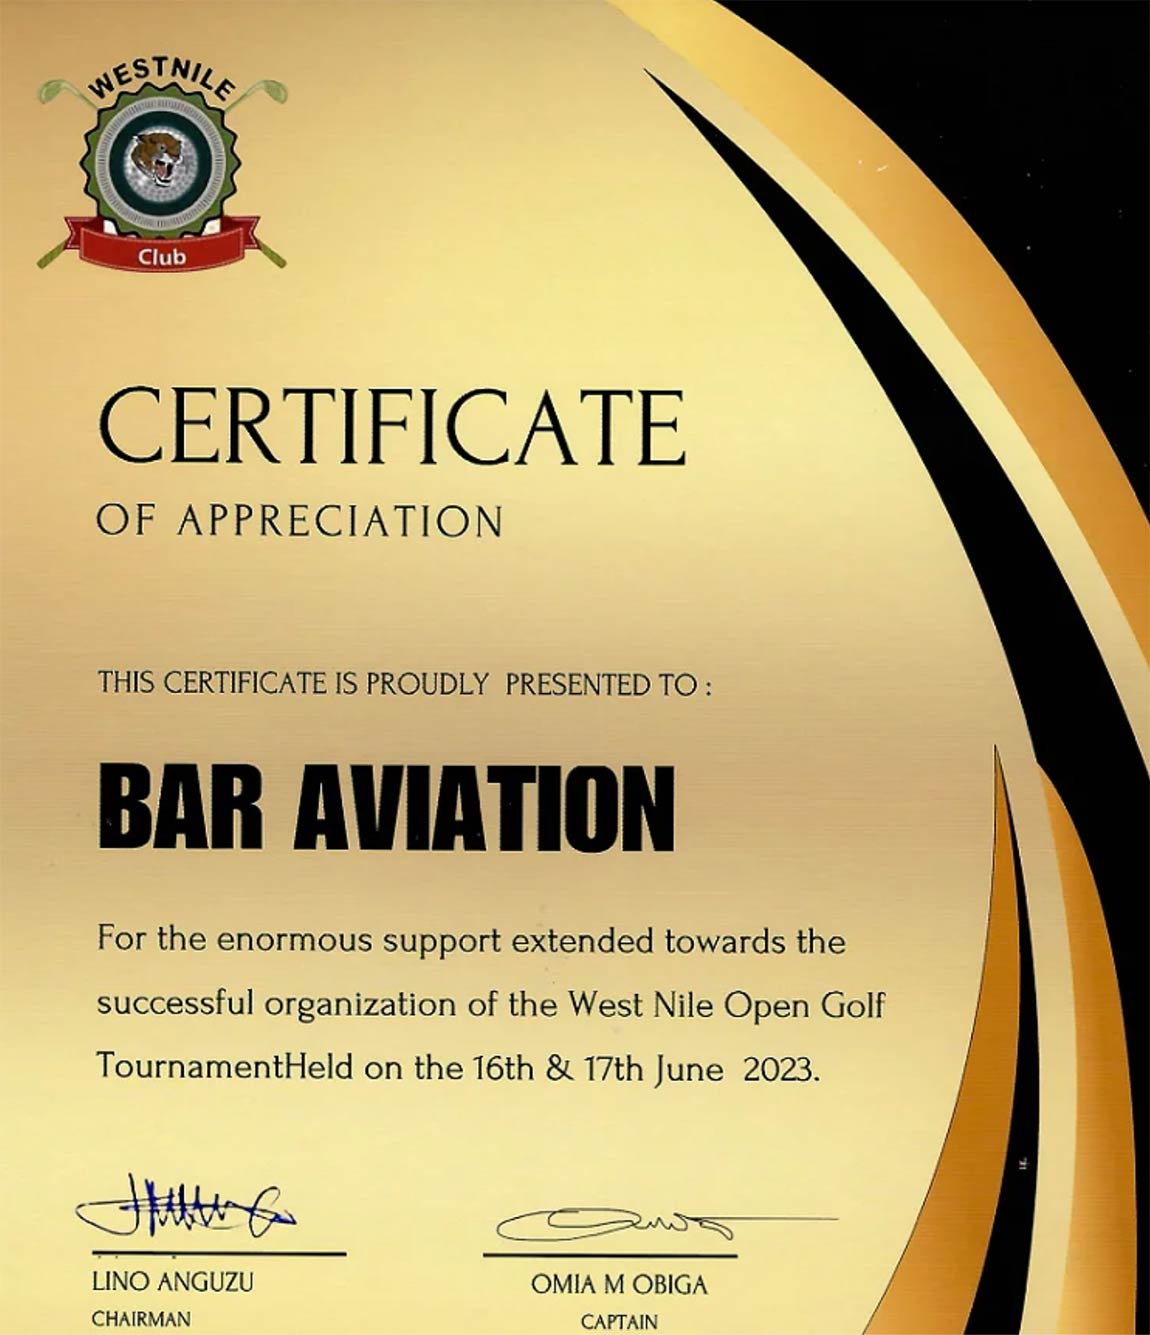 BAR Aviation certificate for golf